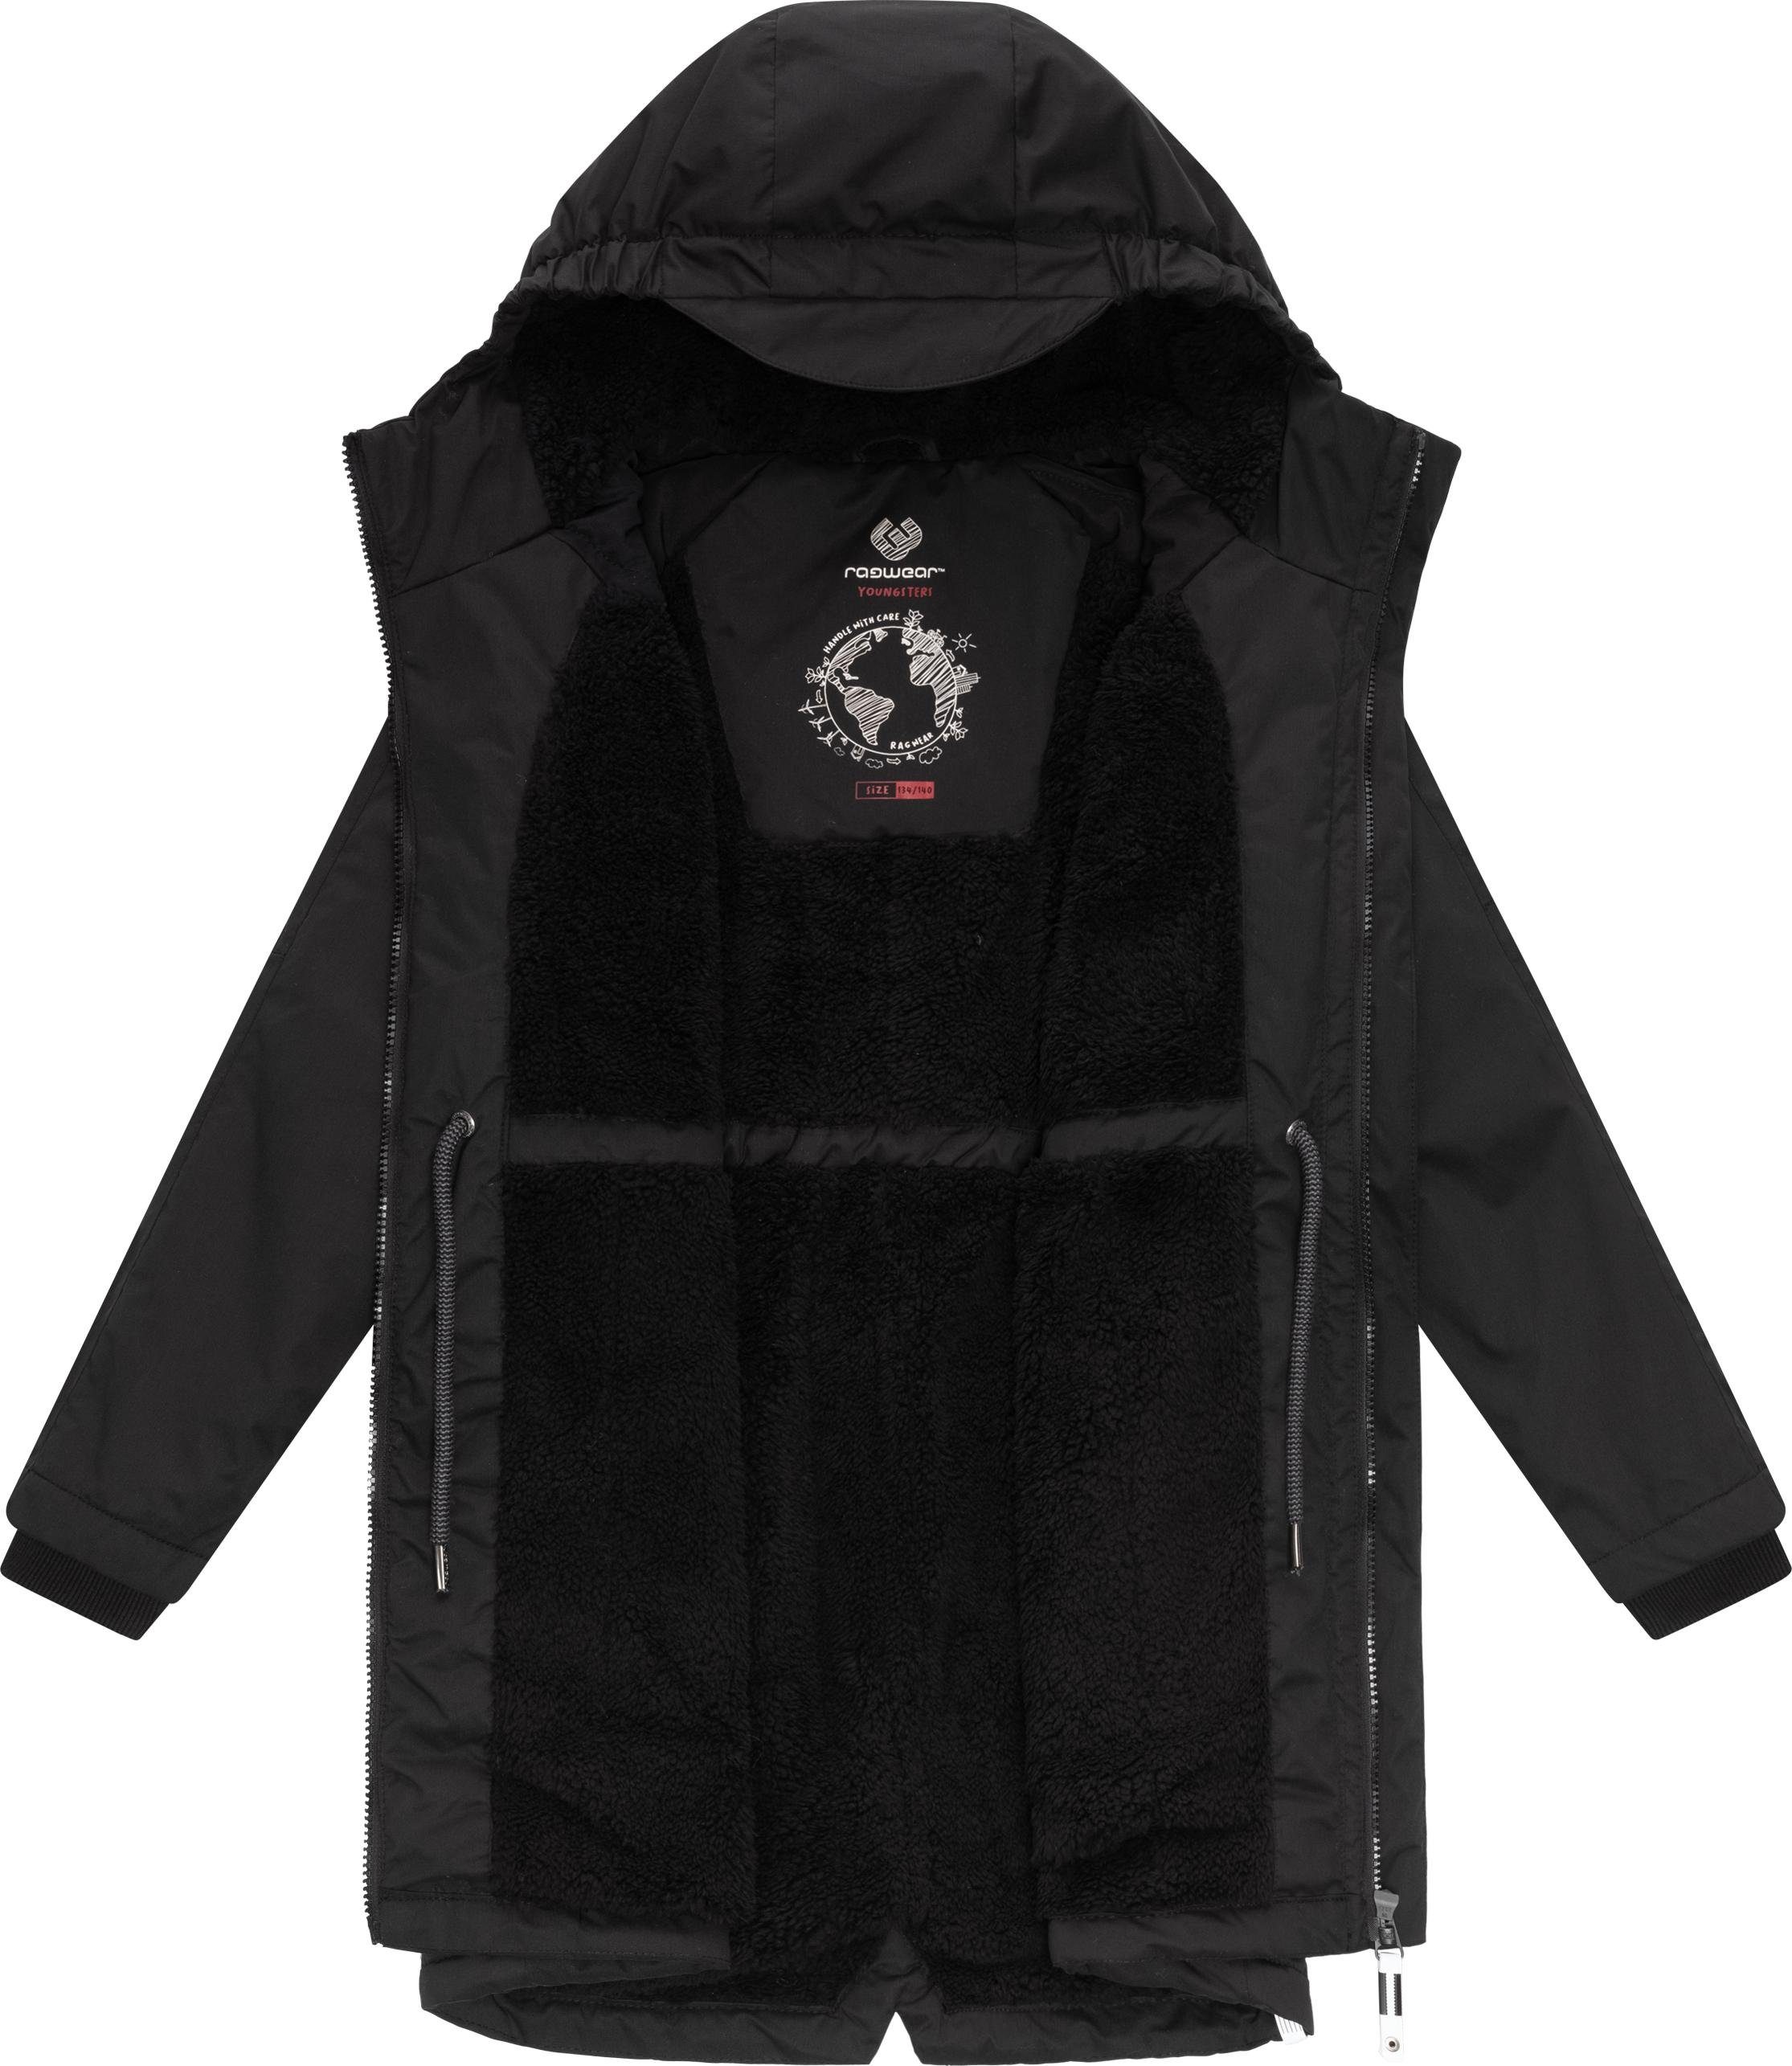 B schwarz mit warmem Uniparka Teddyfell-Innenfutter flauschig Ragwear Jacke Winterjacke